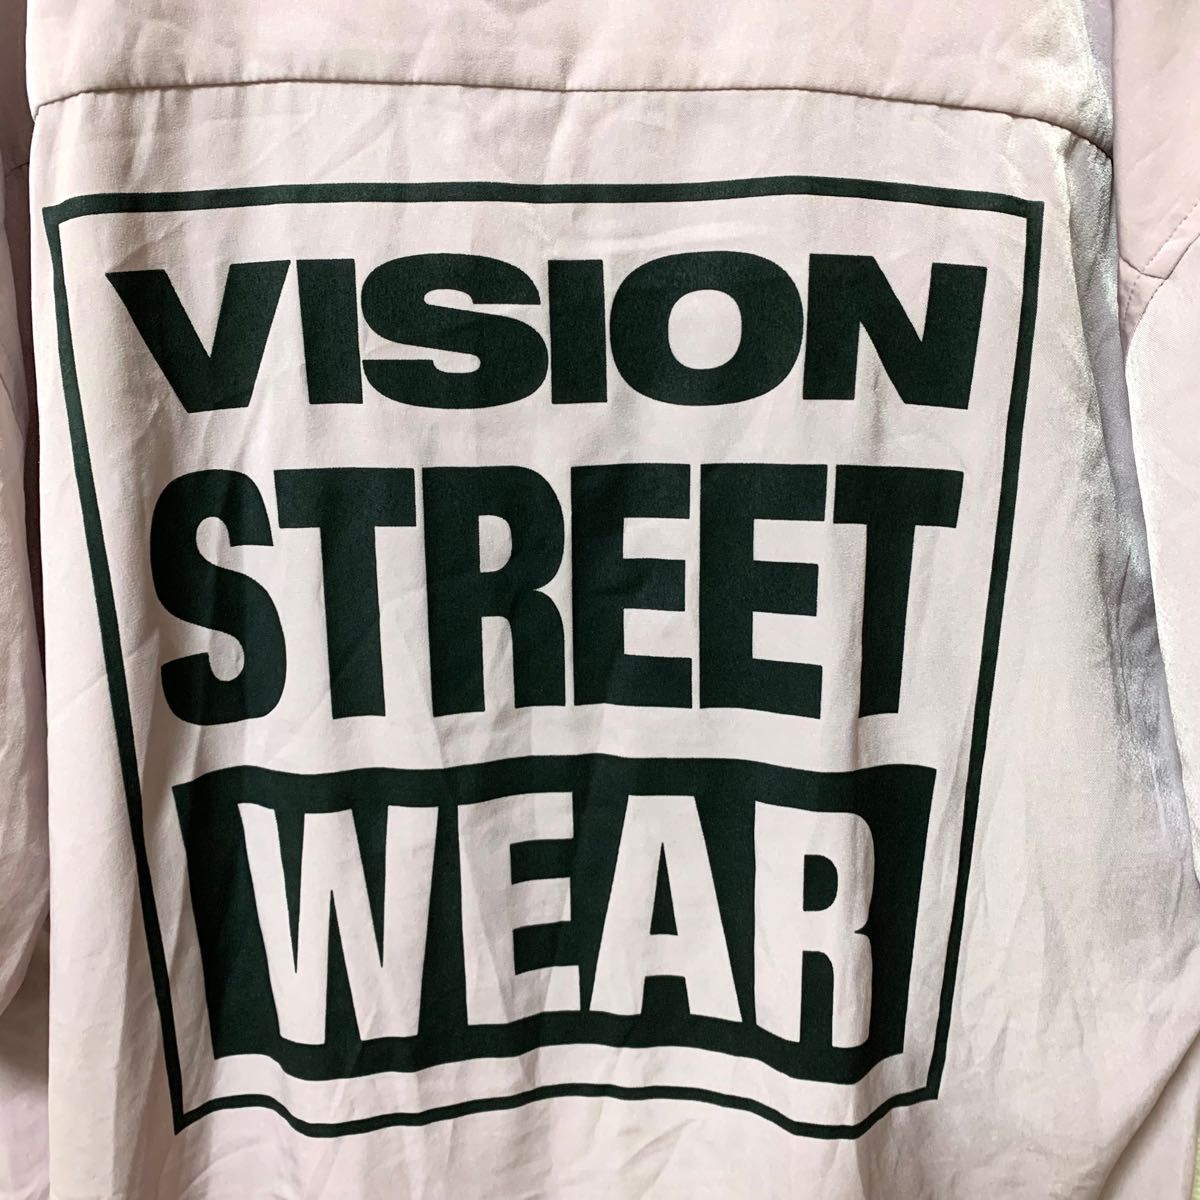 VISION ビジョン 半袖Tシャツ ビッグロゴプリント オープンカラー M 古着 薄ピンク ワークシャツ